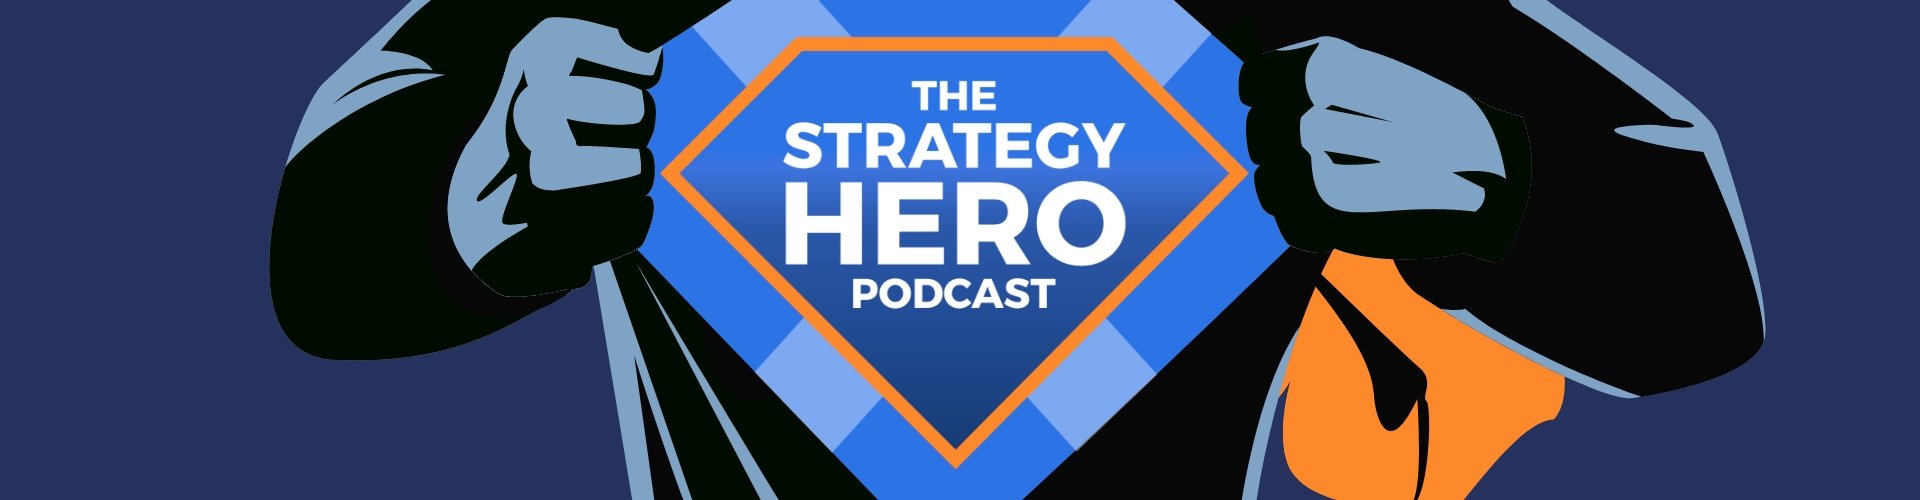 Strategy-hero-1920x500 (1)